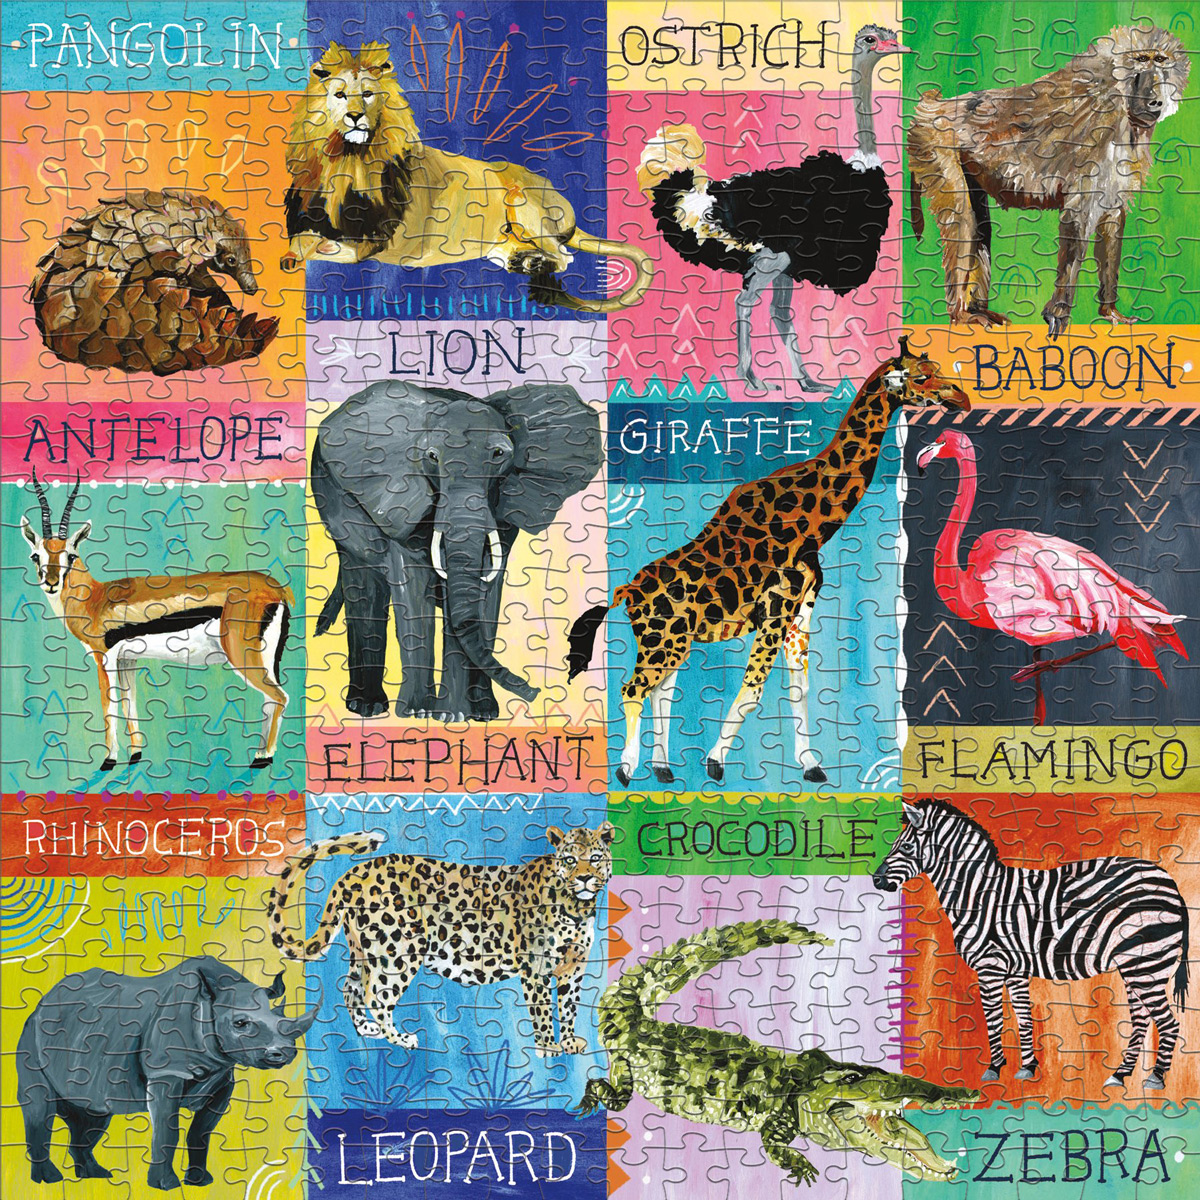 Painted Safari Family Puzzle Jungle Animals Jigsaw Puzzle